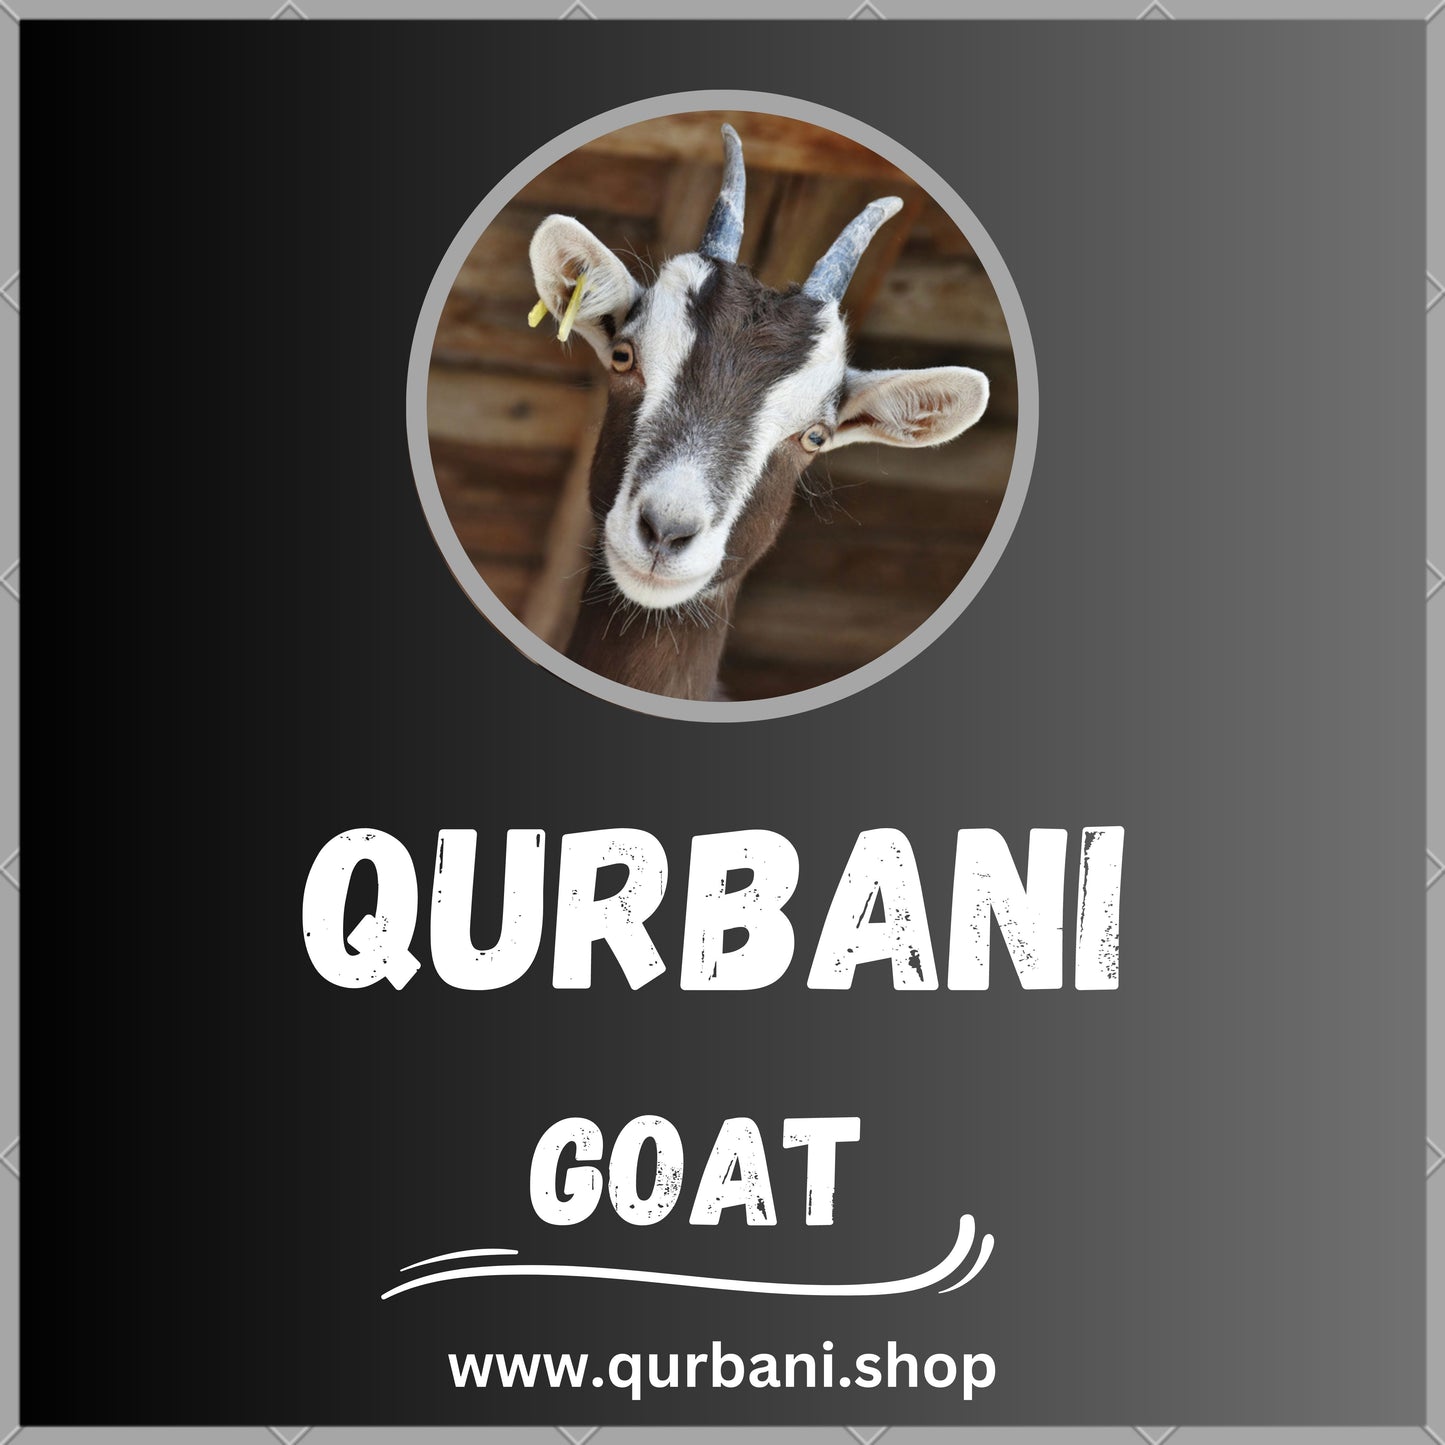 Perform Qurbani in Bakersfield - Book Your Eid Sacrifice